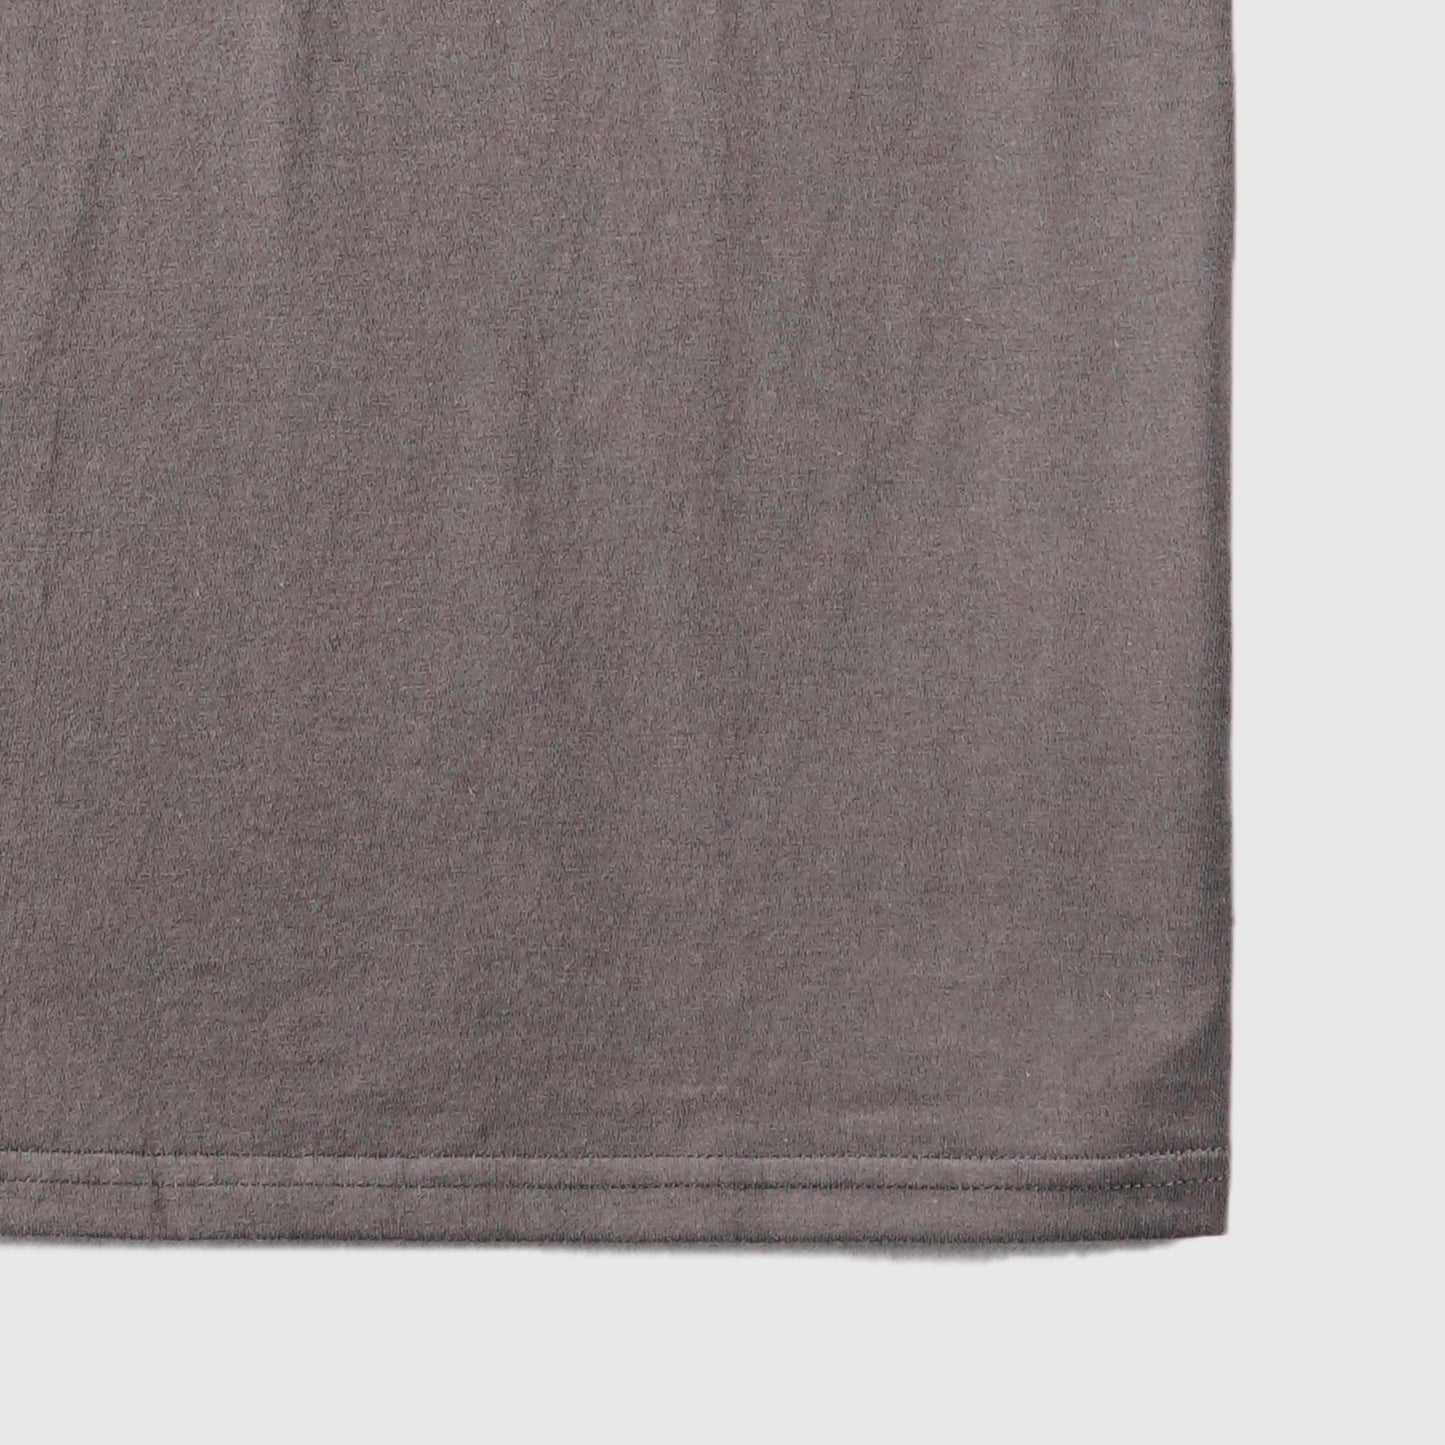 Petrol Basic Tees for Men Slim Fitting Shirt CVC Jersey Fabric Trendy fashion Casual Top T-shirt for Men 146950-U (Charcoal)